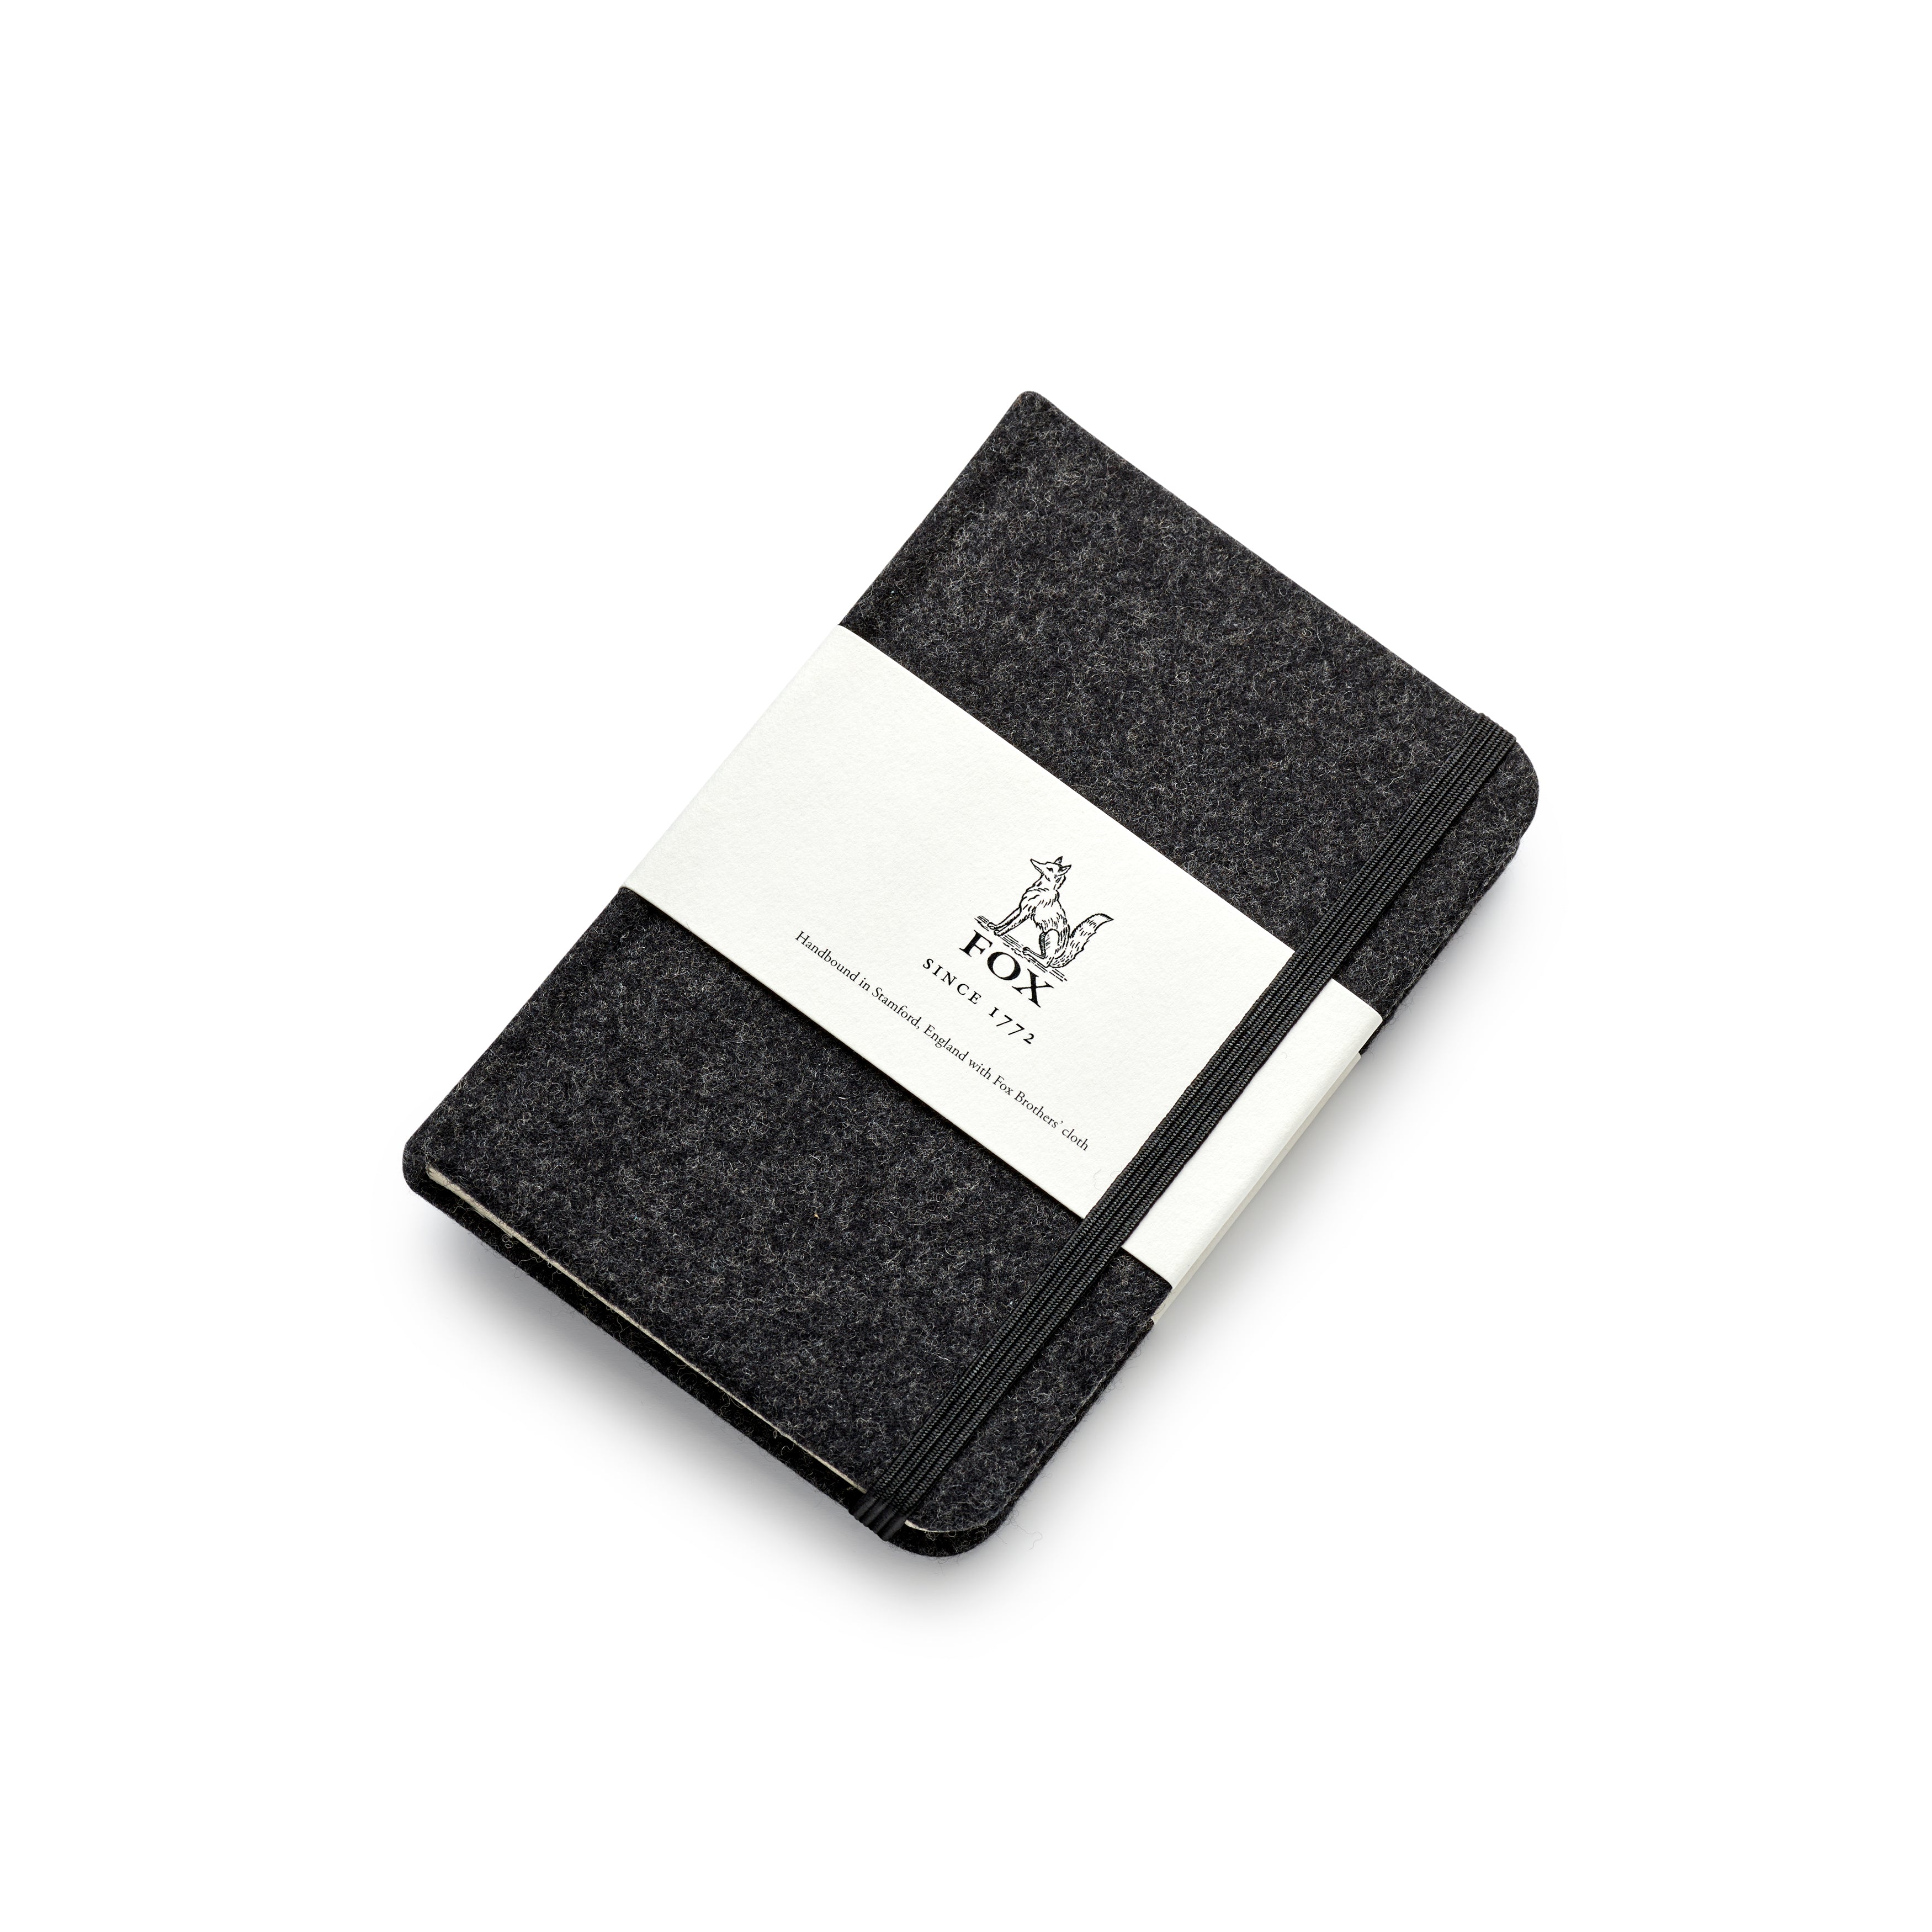 Fox Grey Flannel Pocket Notebook